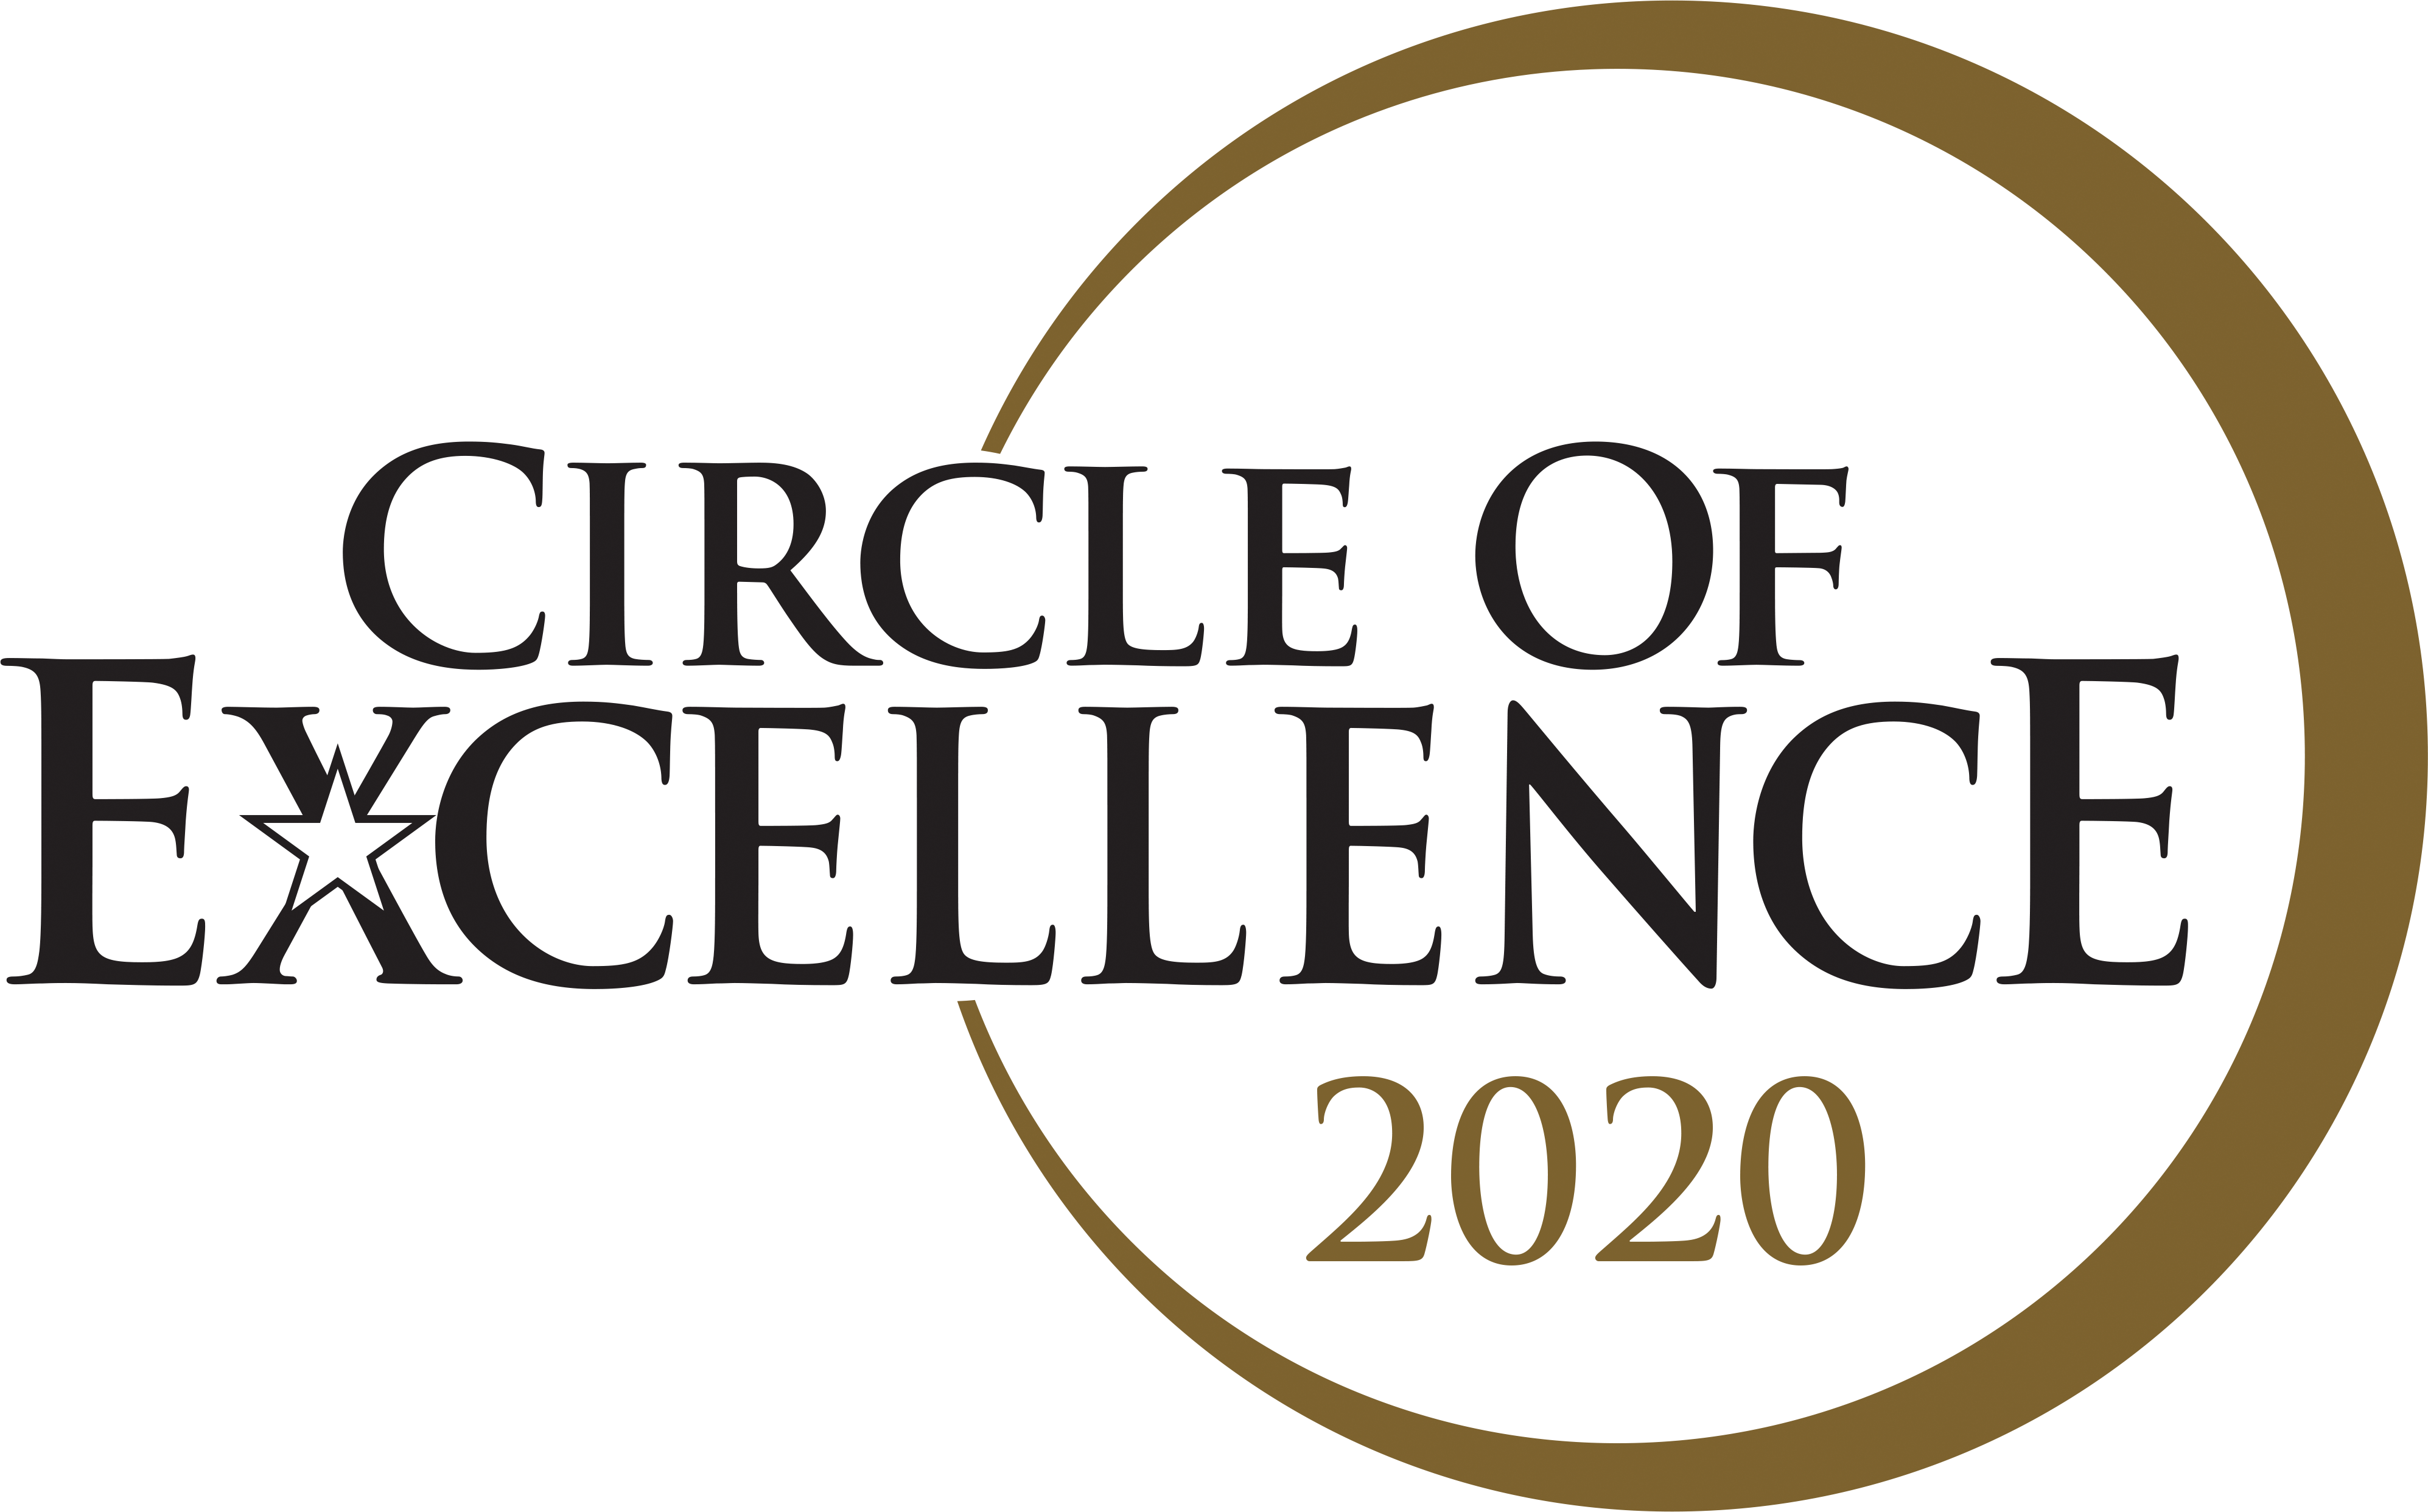 CircleOfExcellence_CABR_2020